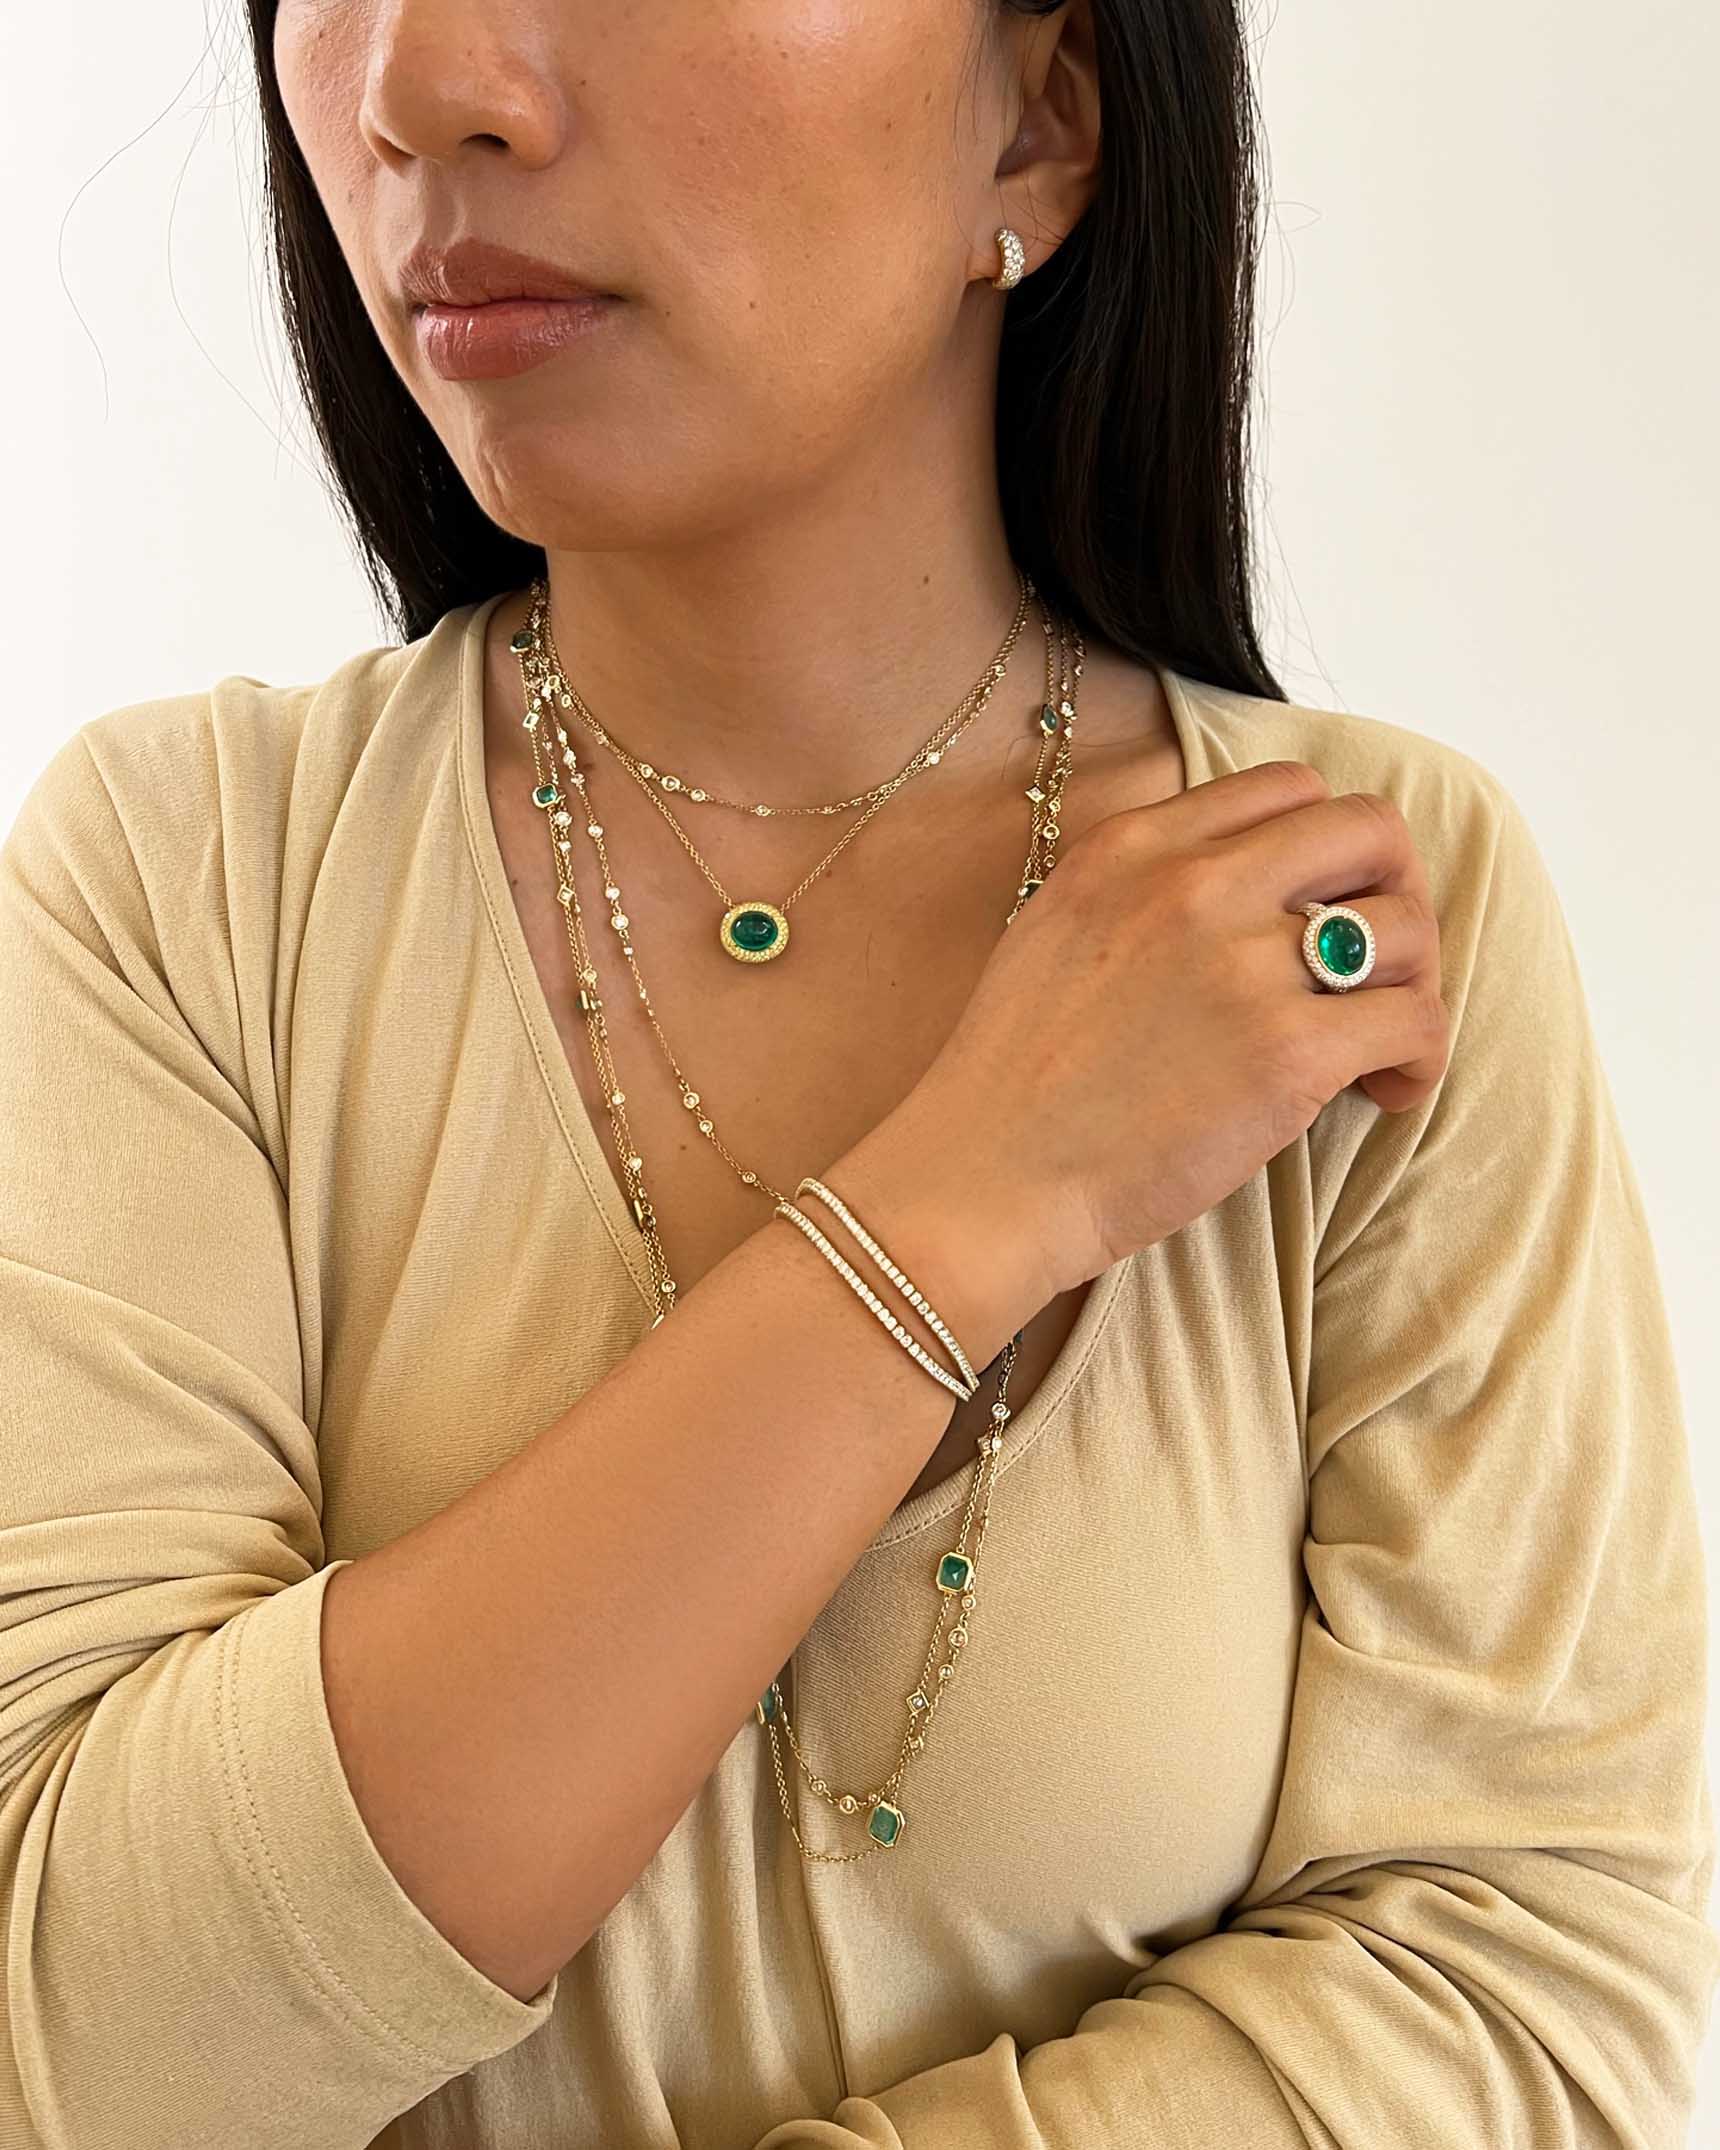 Emerald and Diamond Yellow Gold Earrings_Necklaces_Rings and Bracelets EDF5K06610 – NCOTK01651 – PNC6K01919 – NDOTK05005 – RCDEM01018 – BDUTK01508 – BDUTK01517